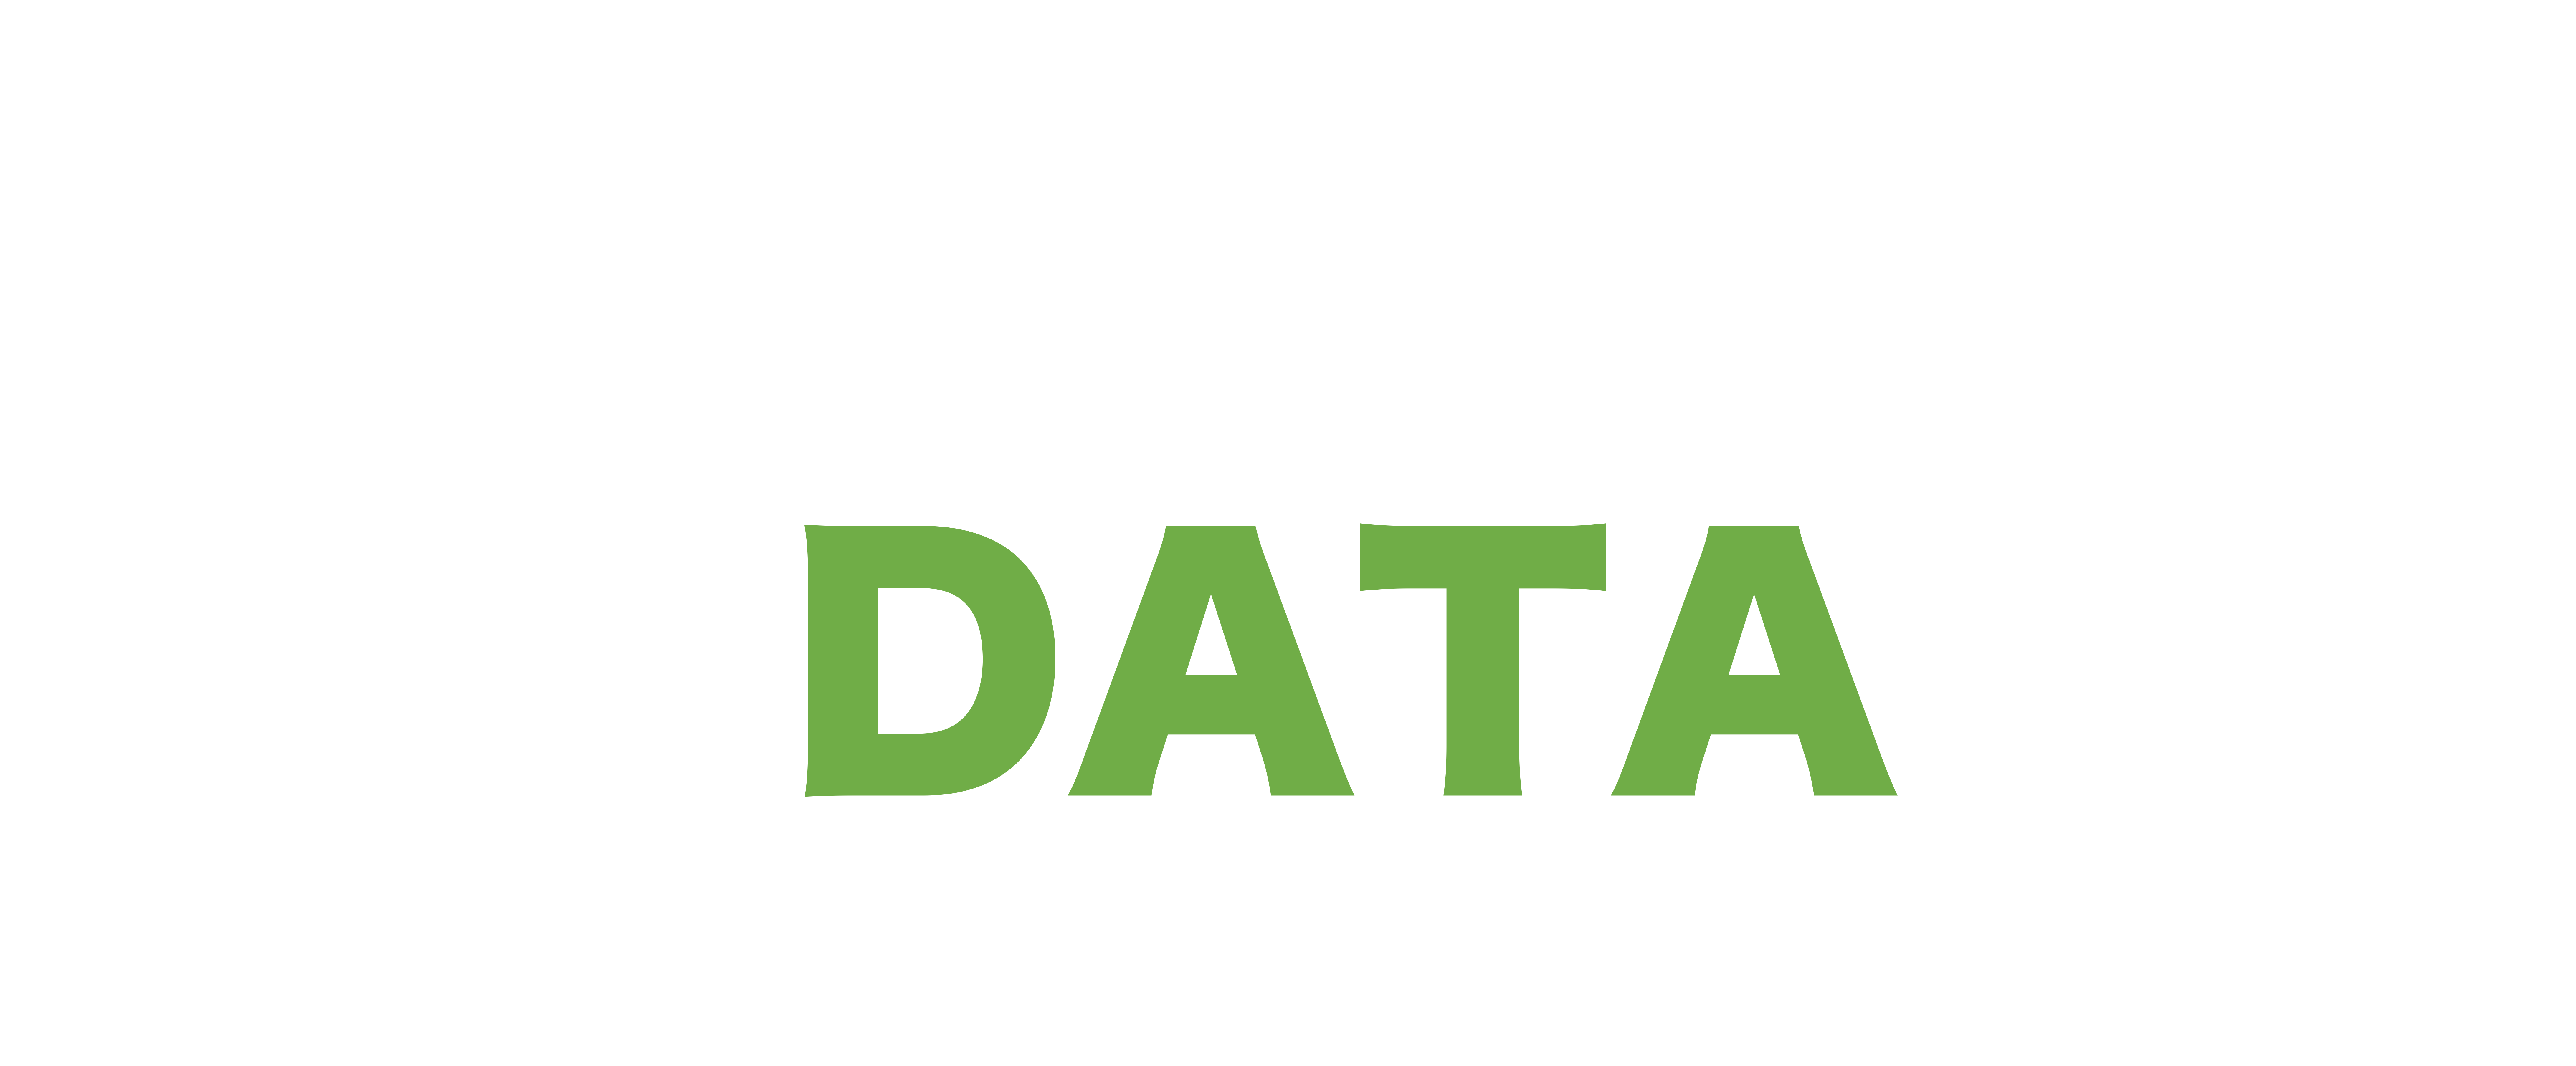 Future of Data